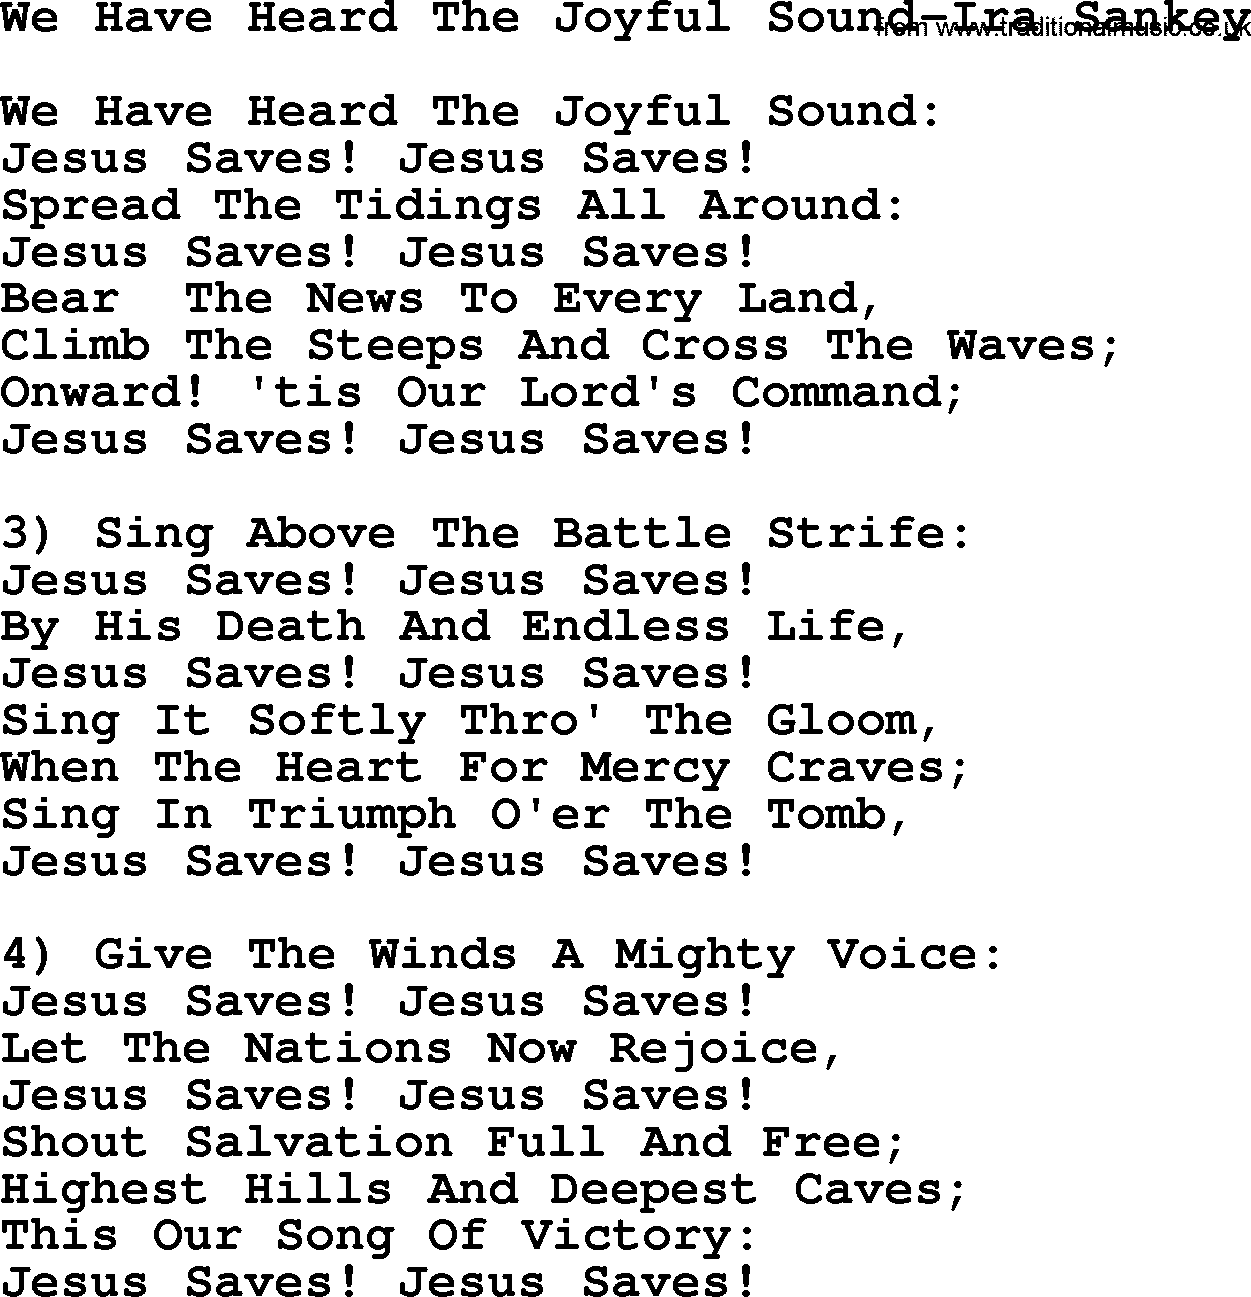 Ira Sankey hymn: We Have Heard The Joyful Sound-Ira Sankey, lyrics